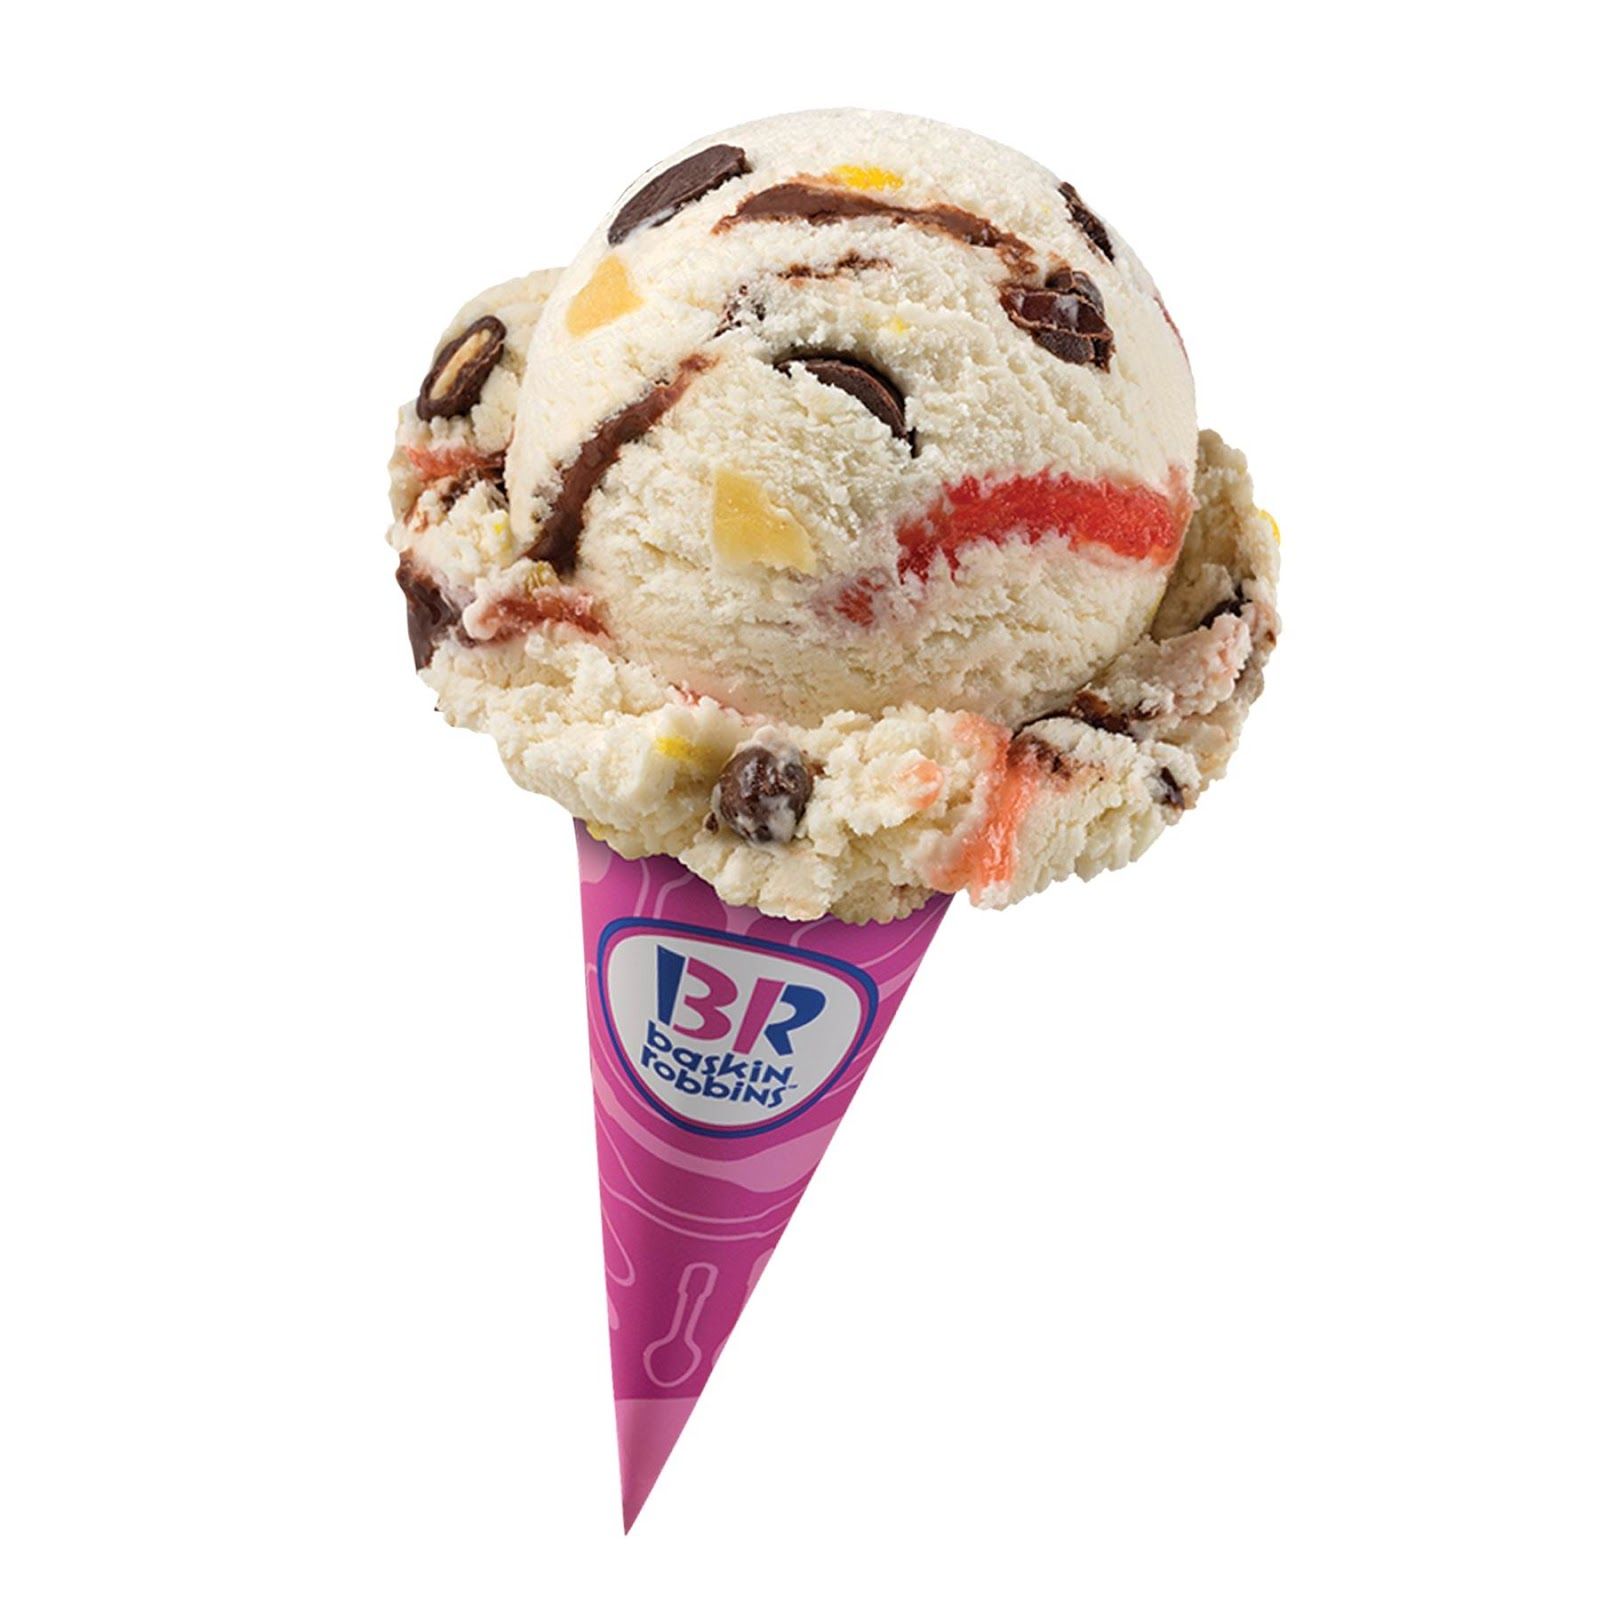 FREE Scoop of Baskin-Robbins Ice Cream